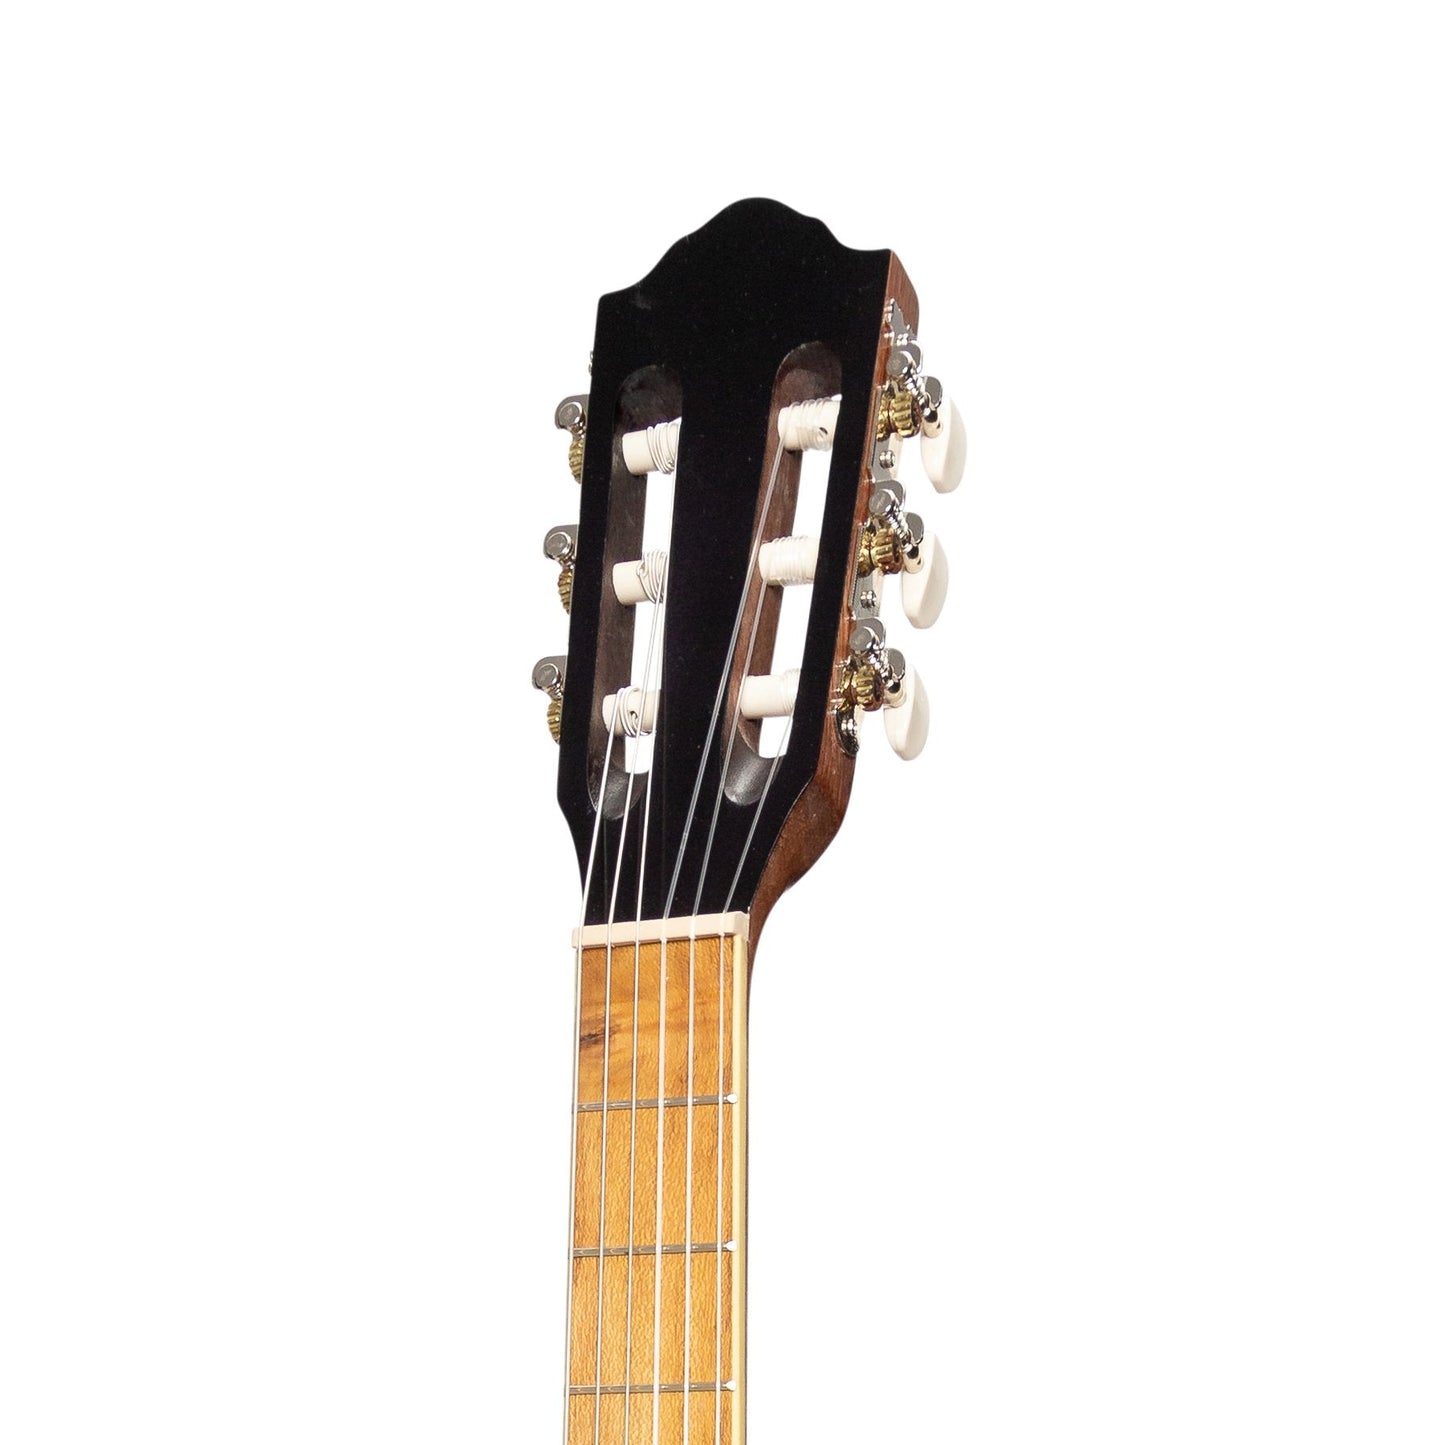 Martinez 'Slim Jim' Full Size Student Classical Guitar Pack with Built In Tuner (Jati-Teakwood)